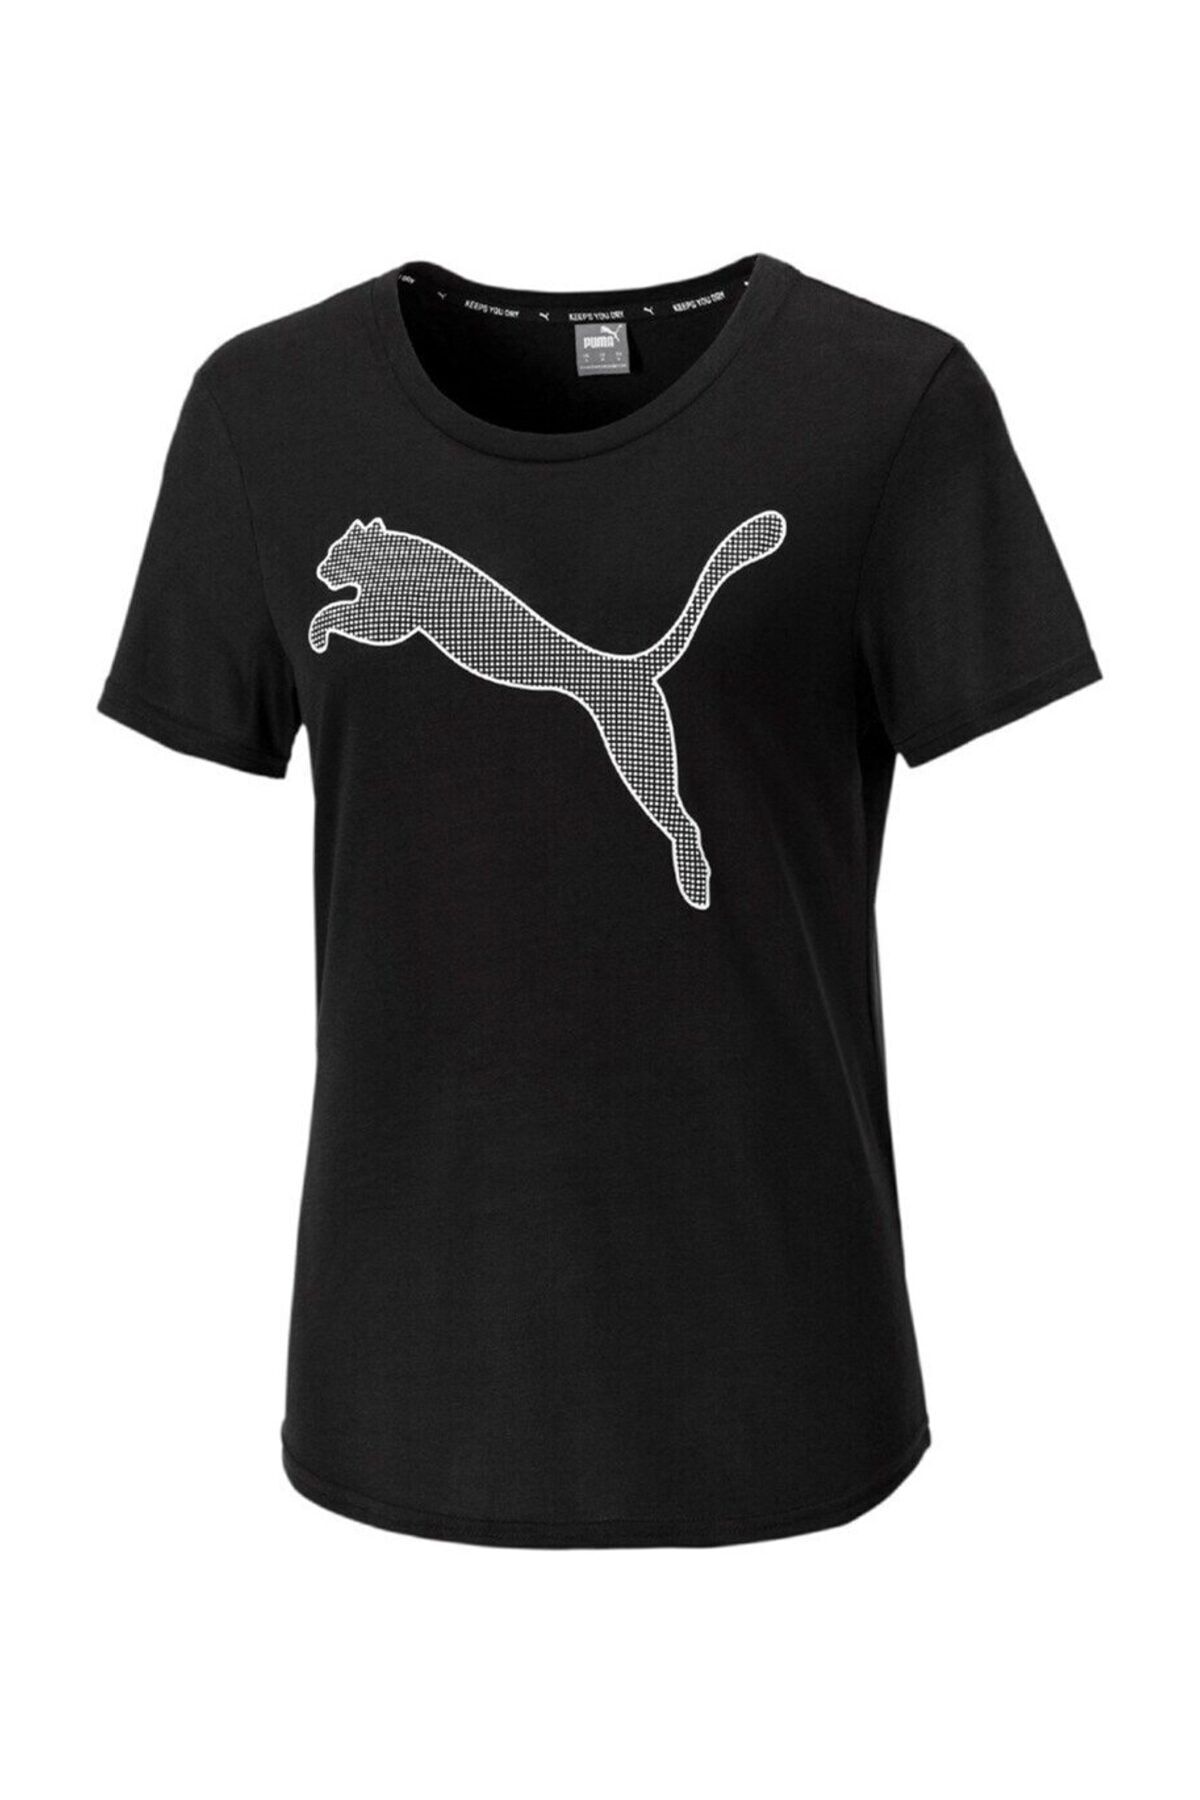 Puma EVOSTRIPE TEE Siyah Kadın T-Shirt 100583654